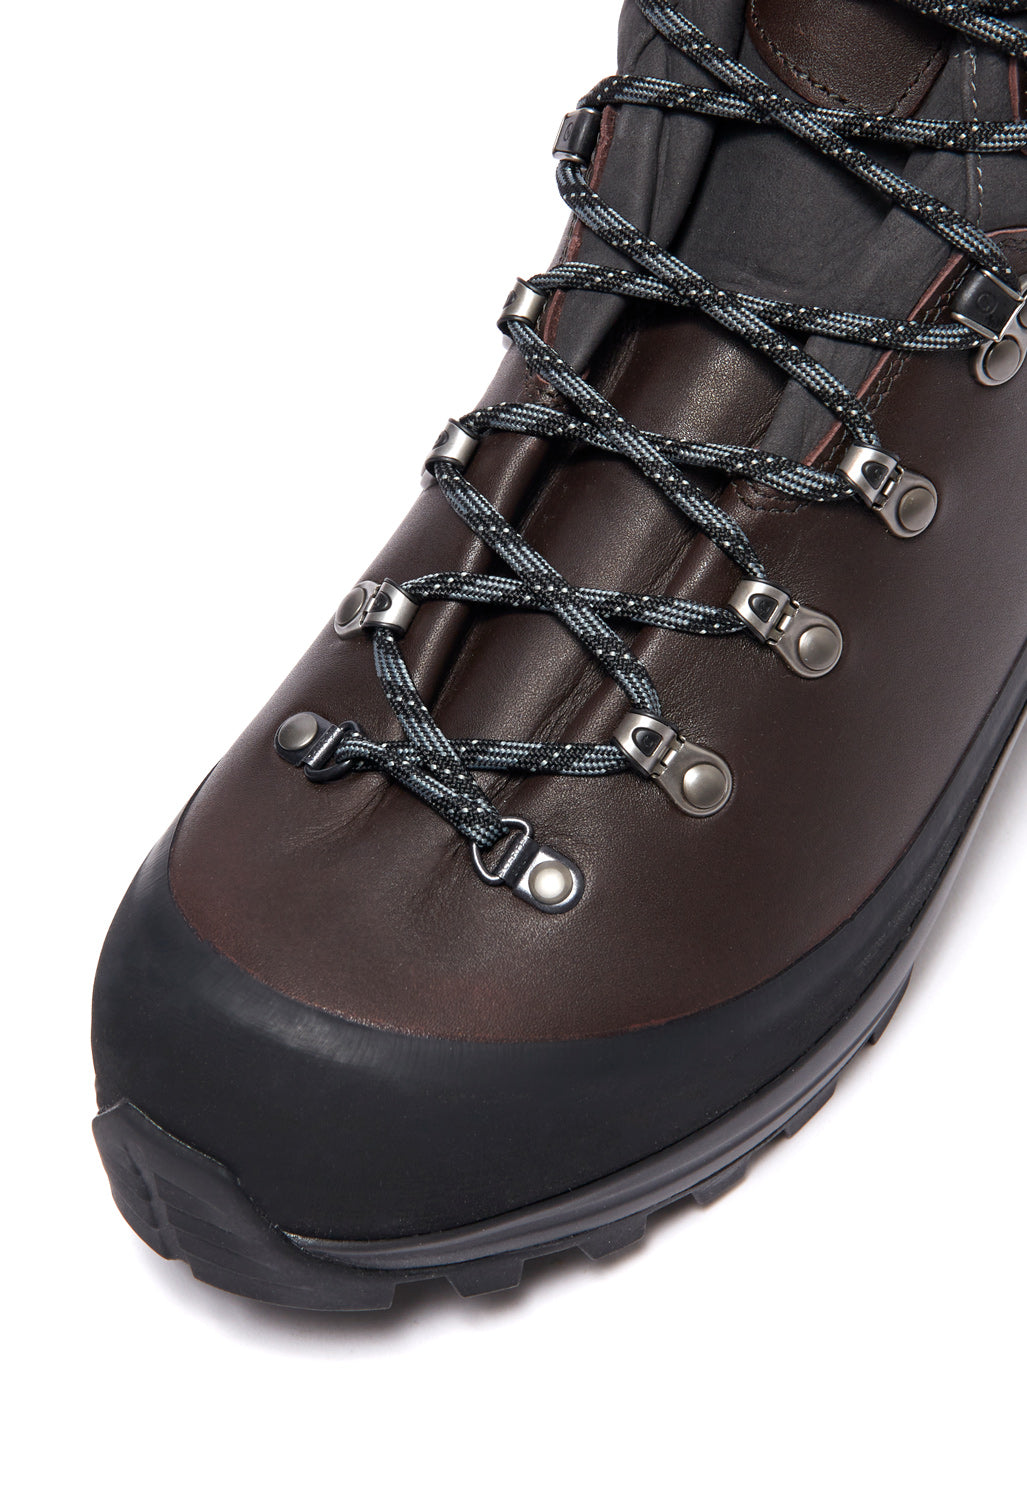 Scarpa SL Active Men's Boots - Bordo